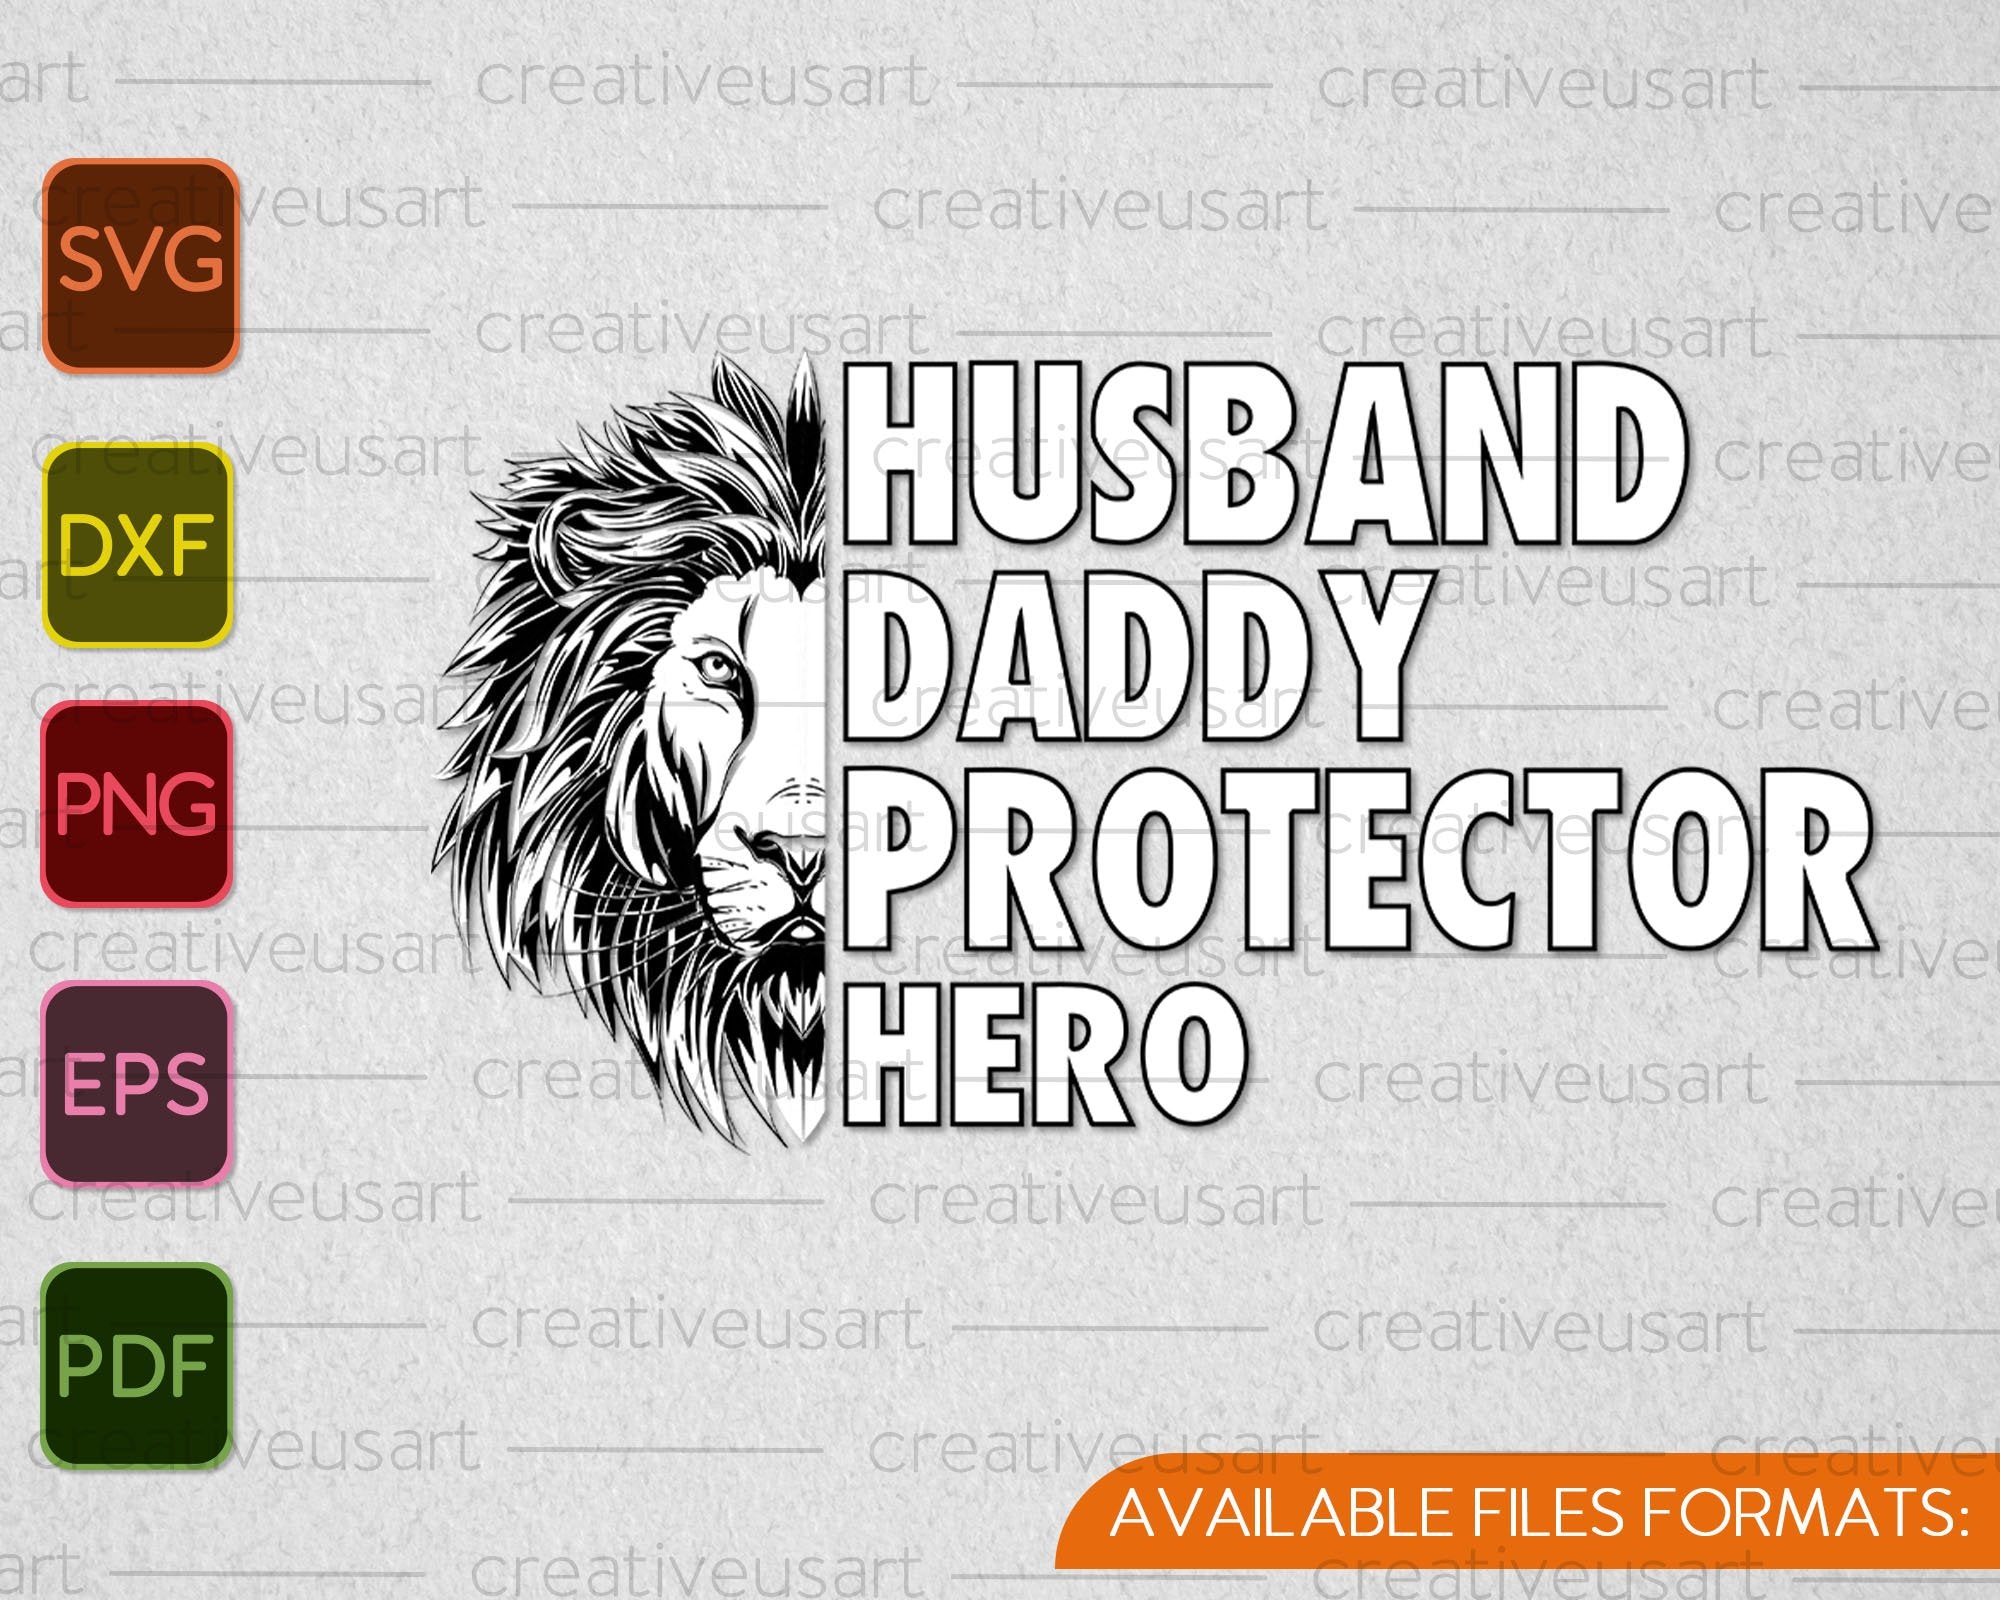 Download Lion Husband Daddy Protector Hero Svg Png Files Creativeusarts